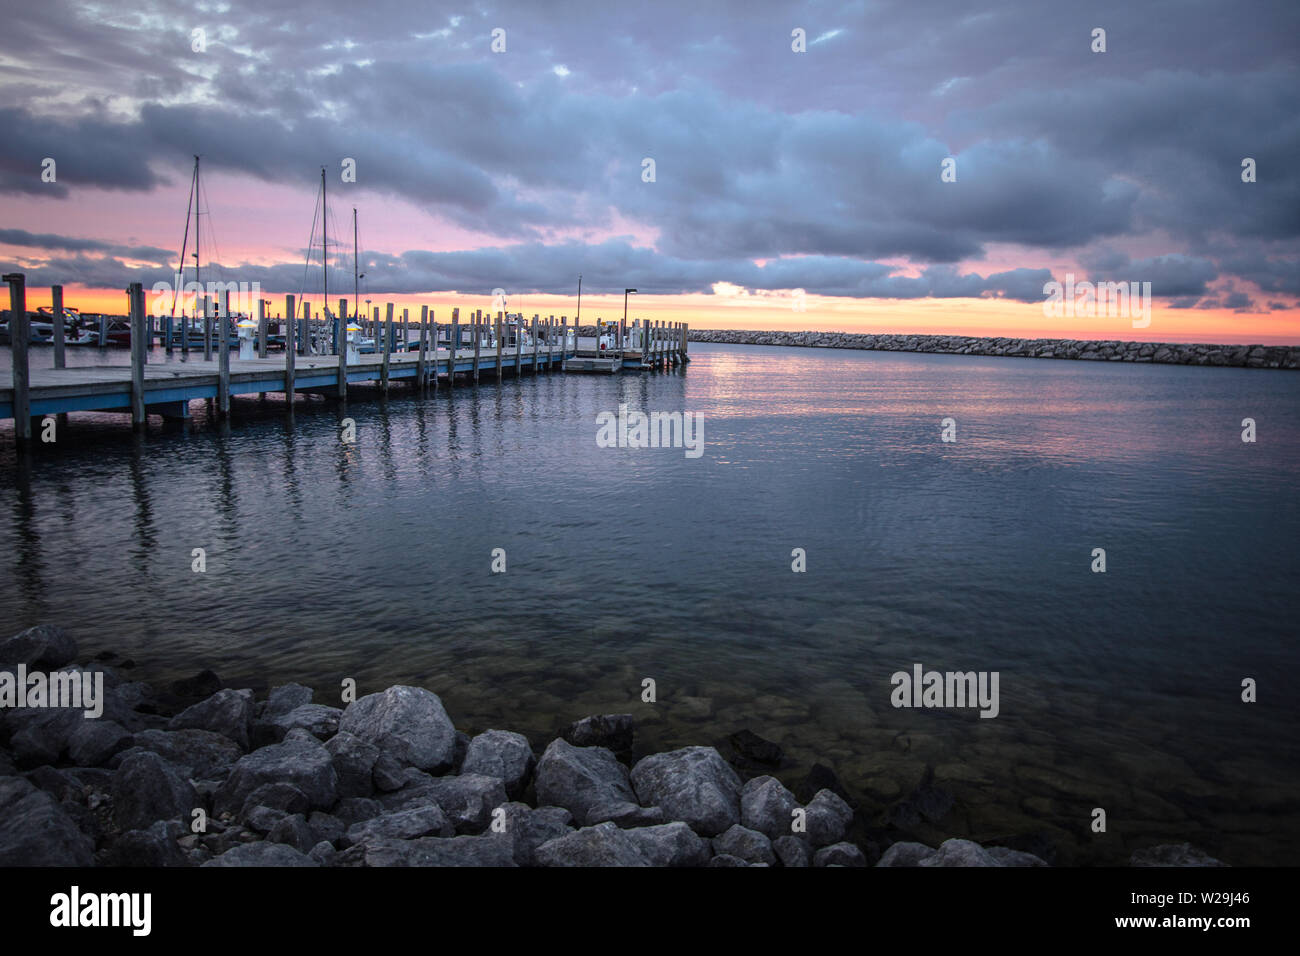 Sailing Sunset Sky Background.. Michigan marina along the Great Lakes coast with a beautiful sunset sky. Cheboygan, Michigan Stock Photo